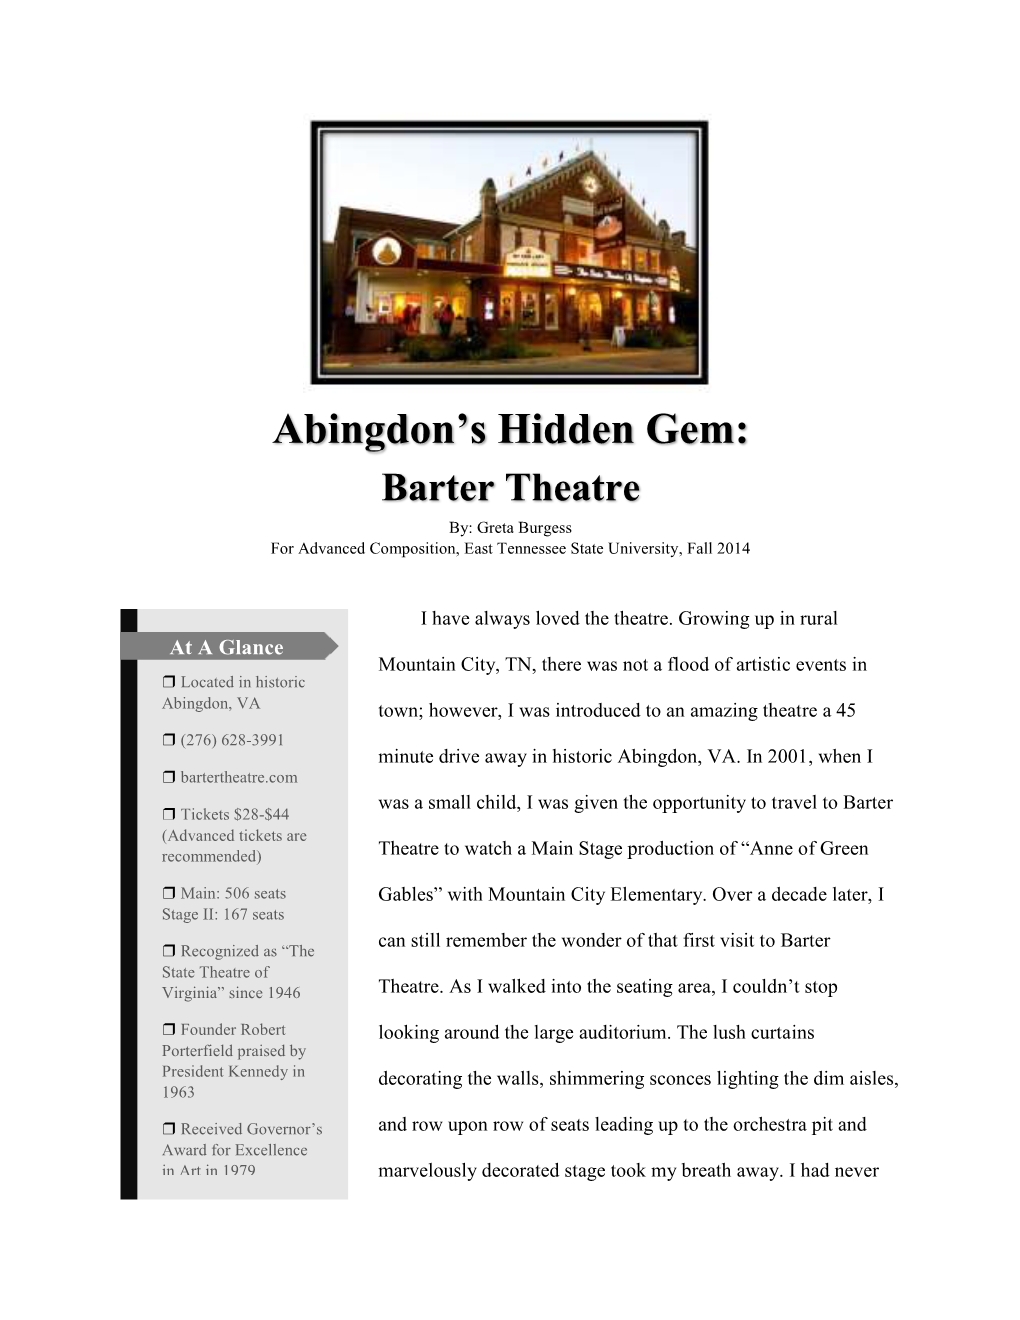 Abingdon's Hidden Gem: Barter Theatre